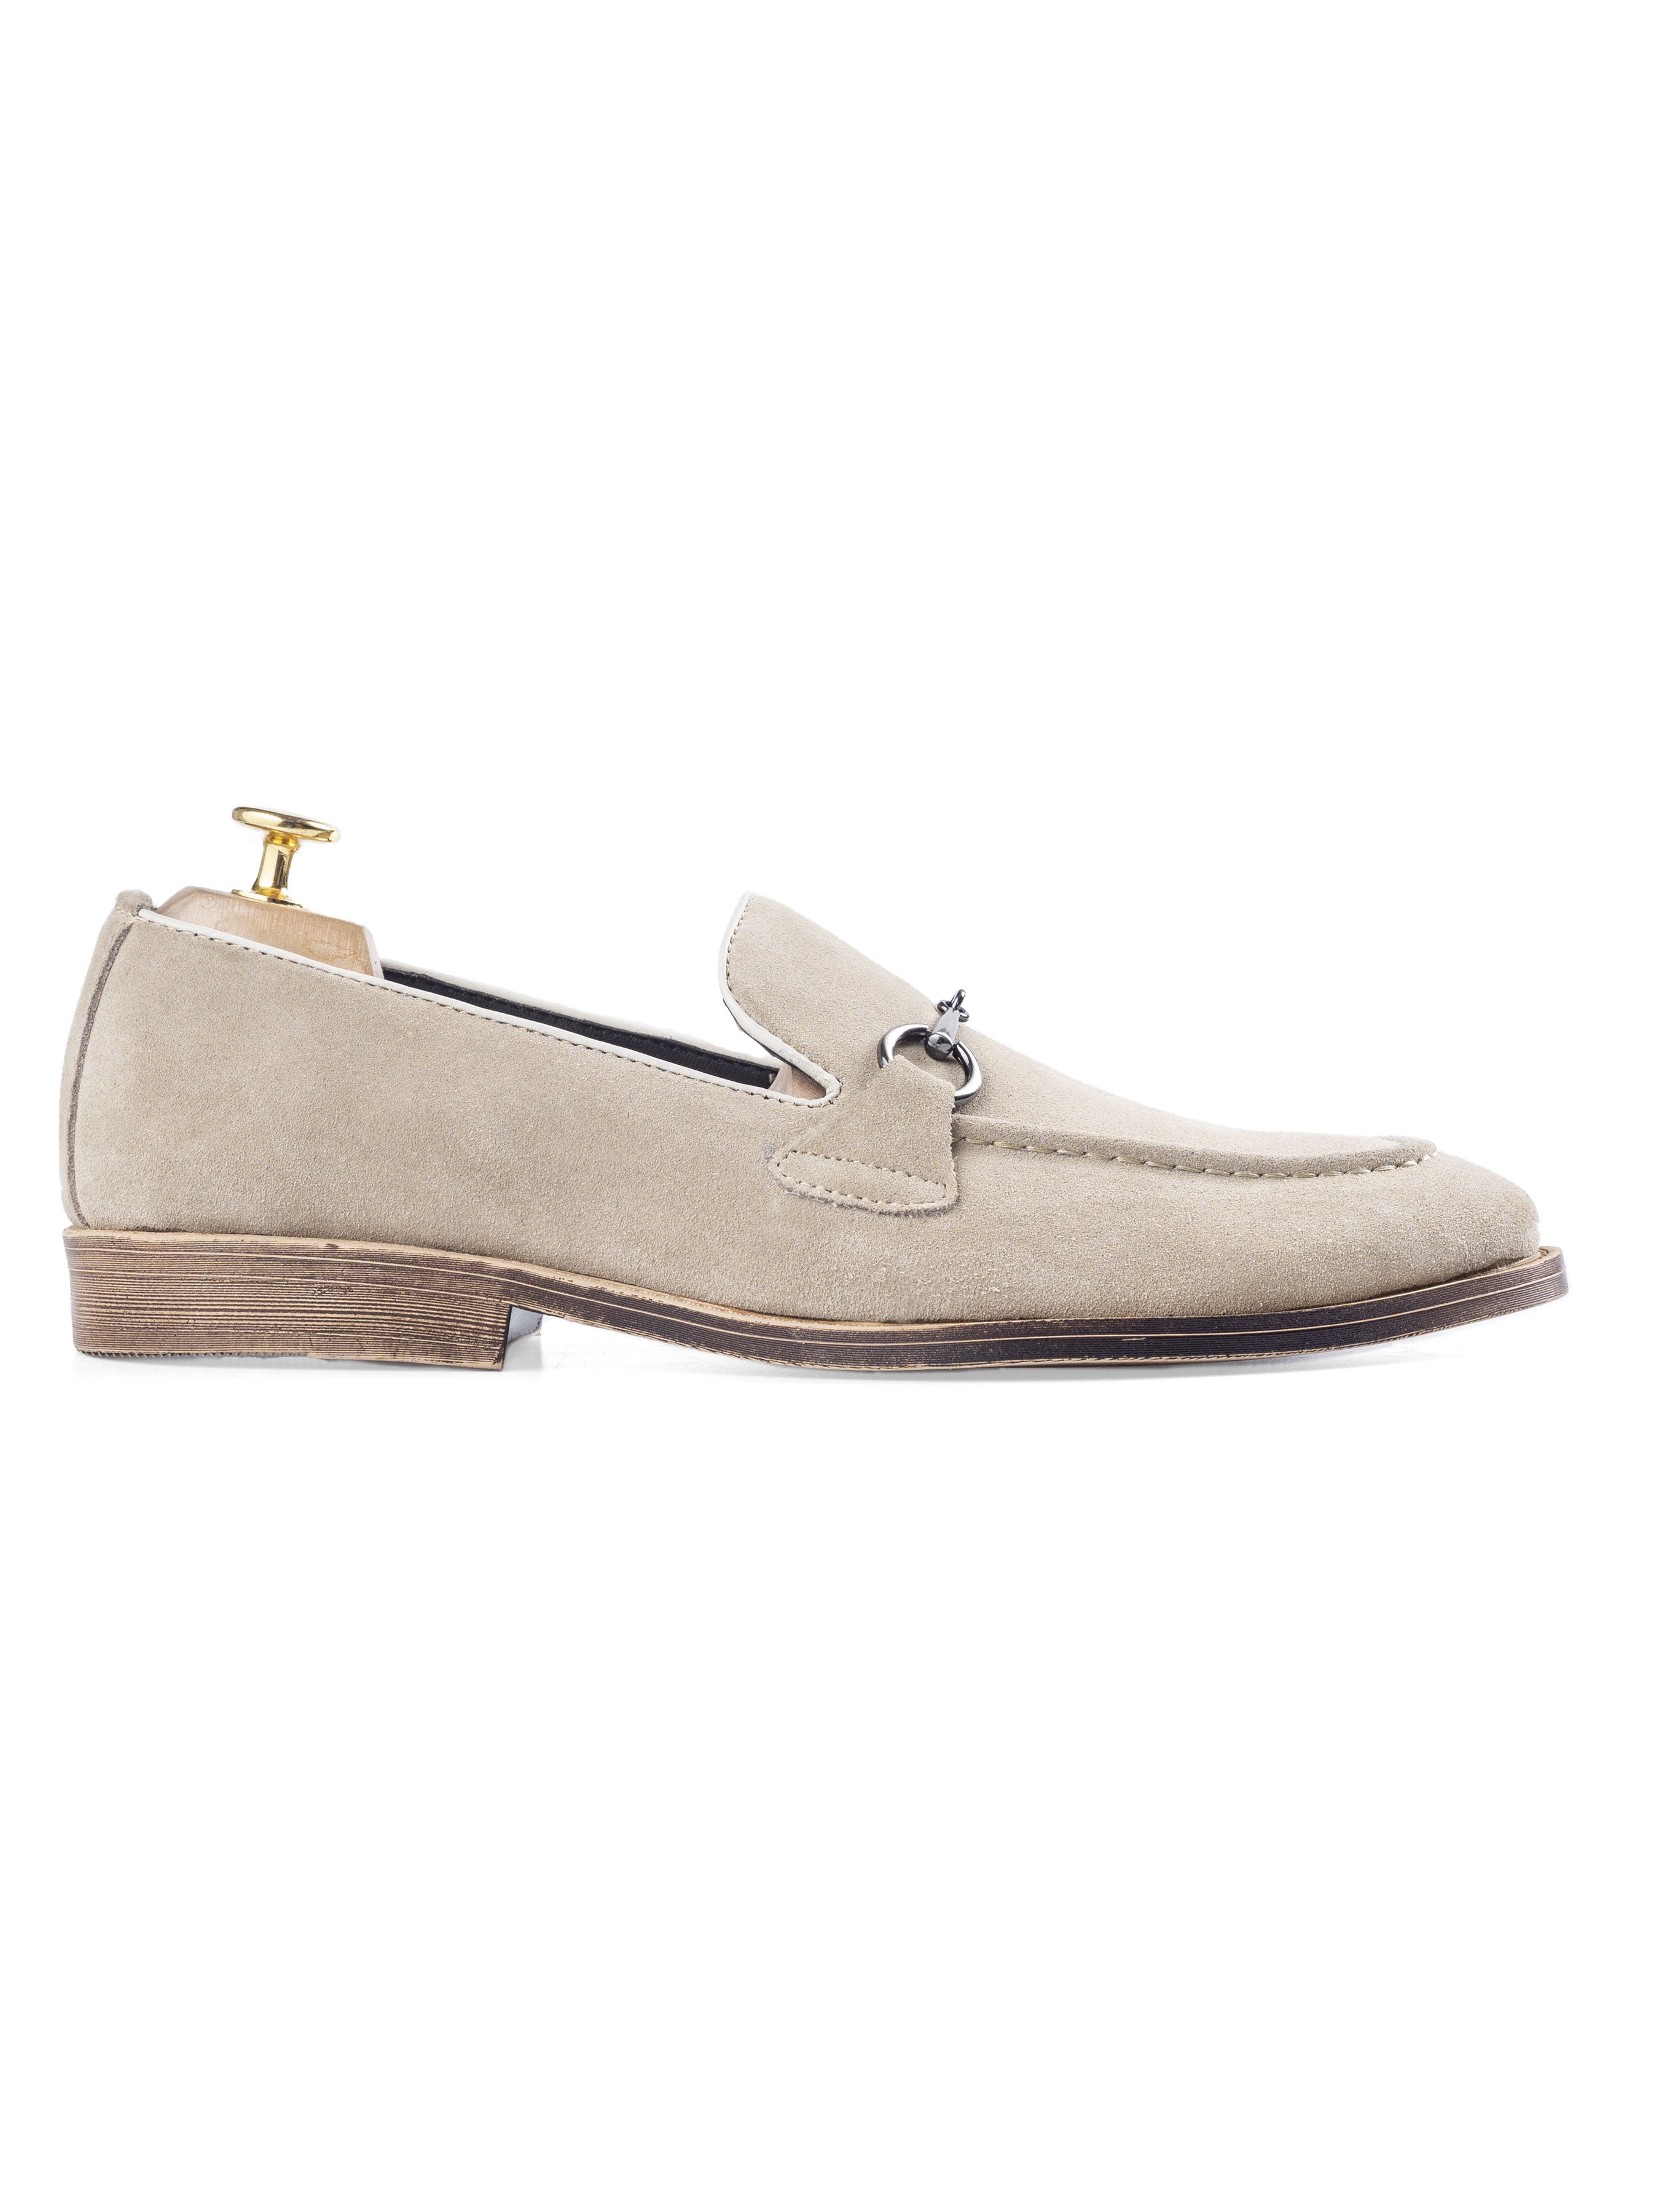 Horsebit Buckle Loafer - Beige Suede Leather (Flexi-Sole) - Zeve Shoes